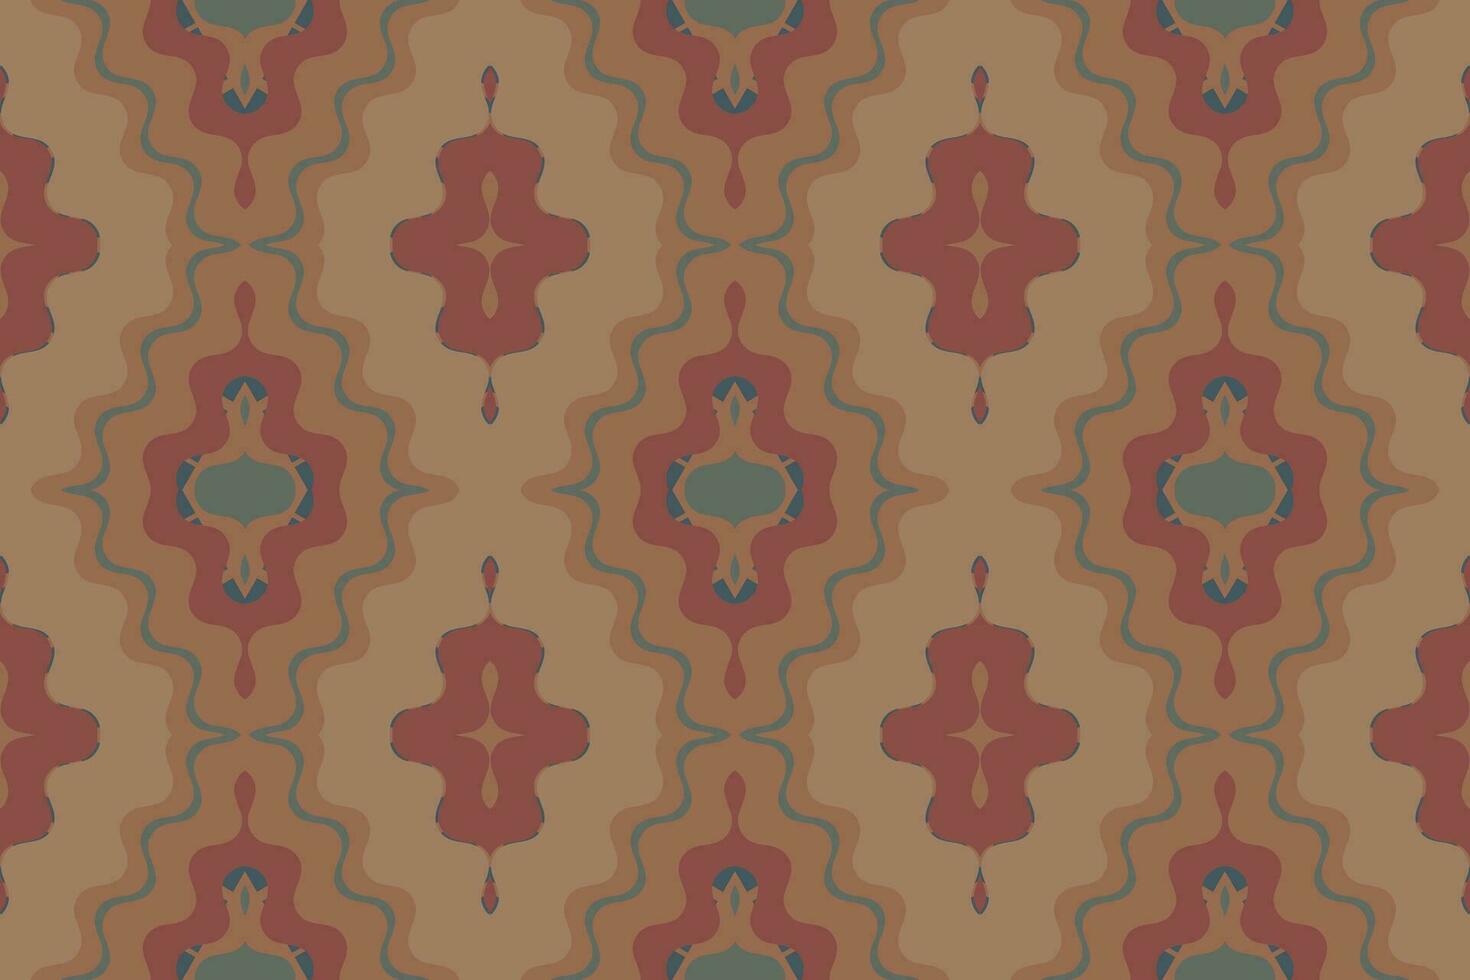 motivo ikat cachemir bordado antecedentes. ikat azteca geométrico étnico oriental modelo tradicional. ikat azteca estilo resumen diseño para impresión textura,tela,sari,sari,alfombra. vector